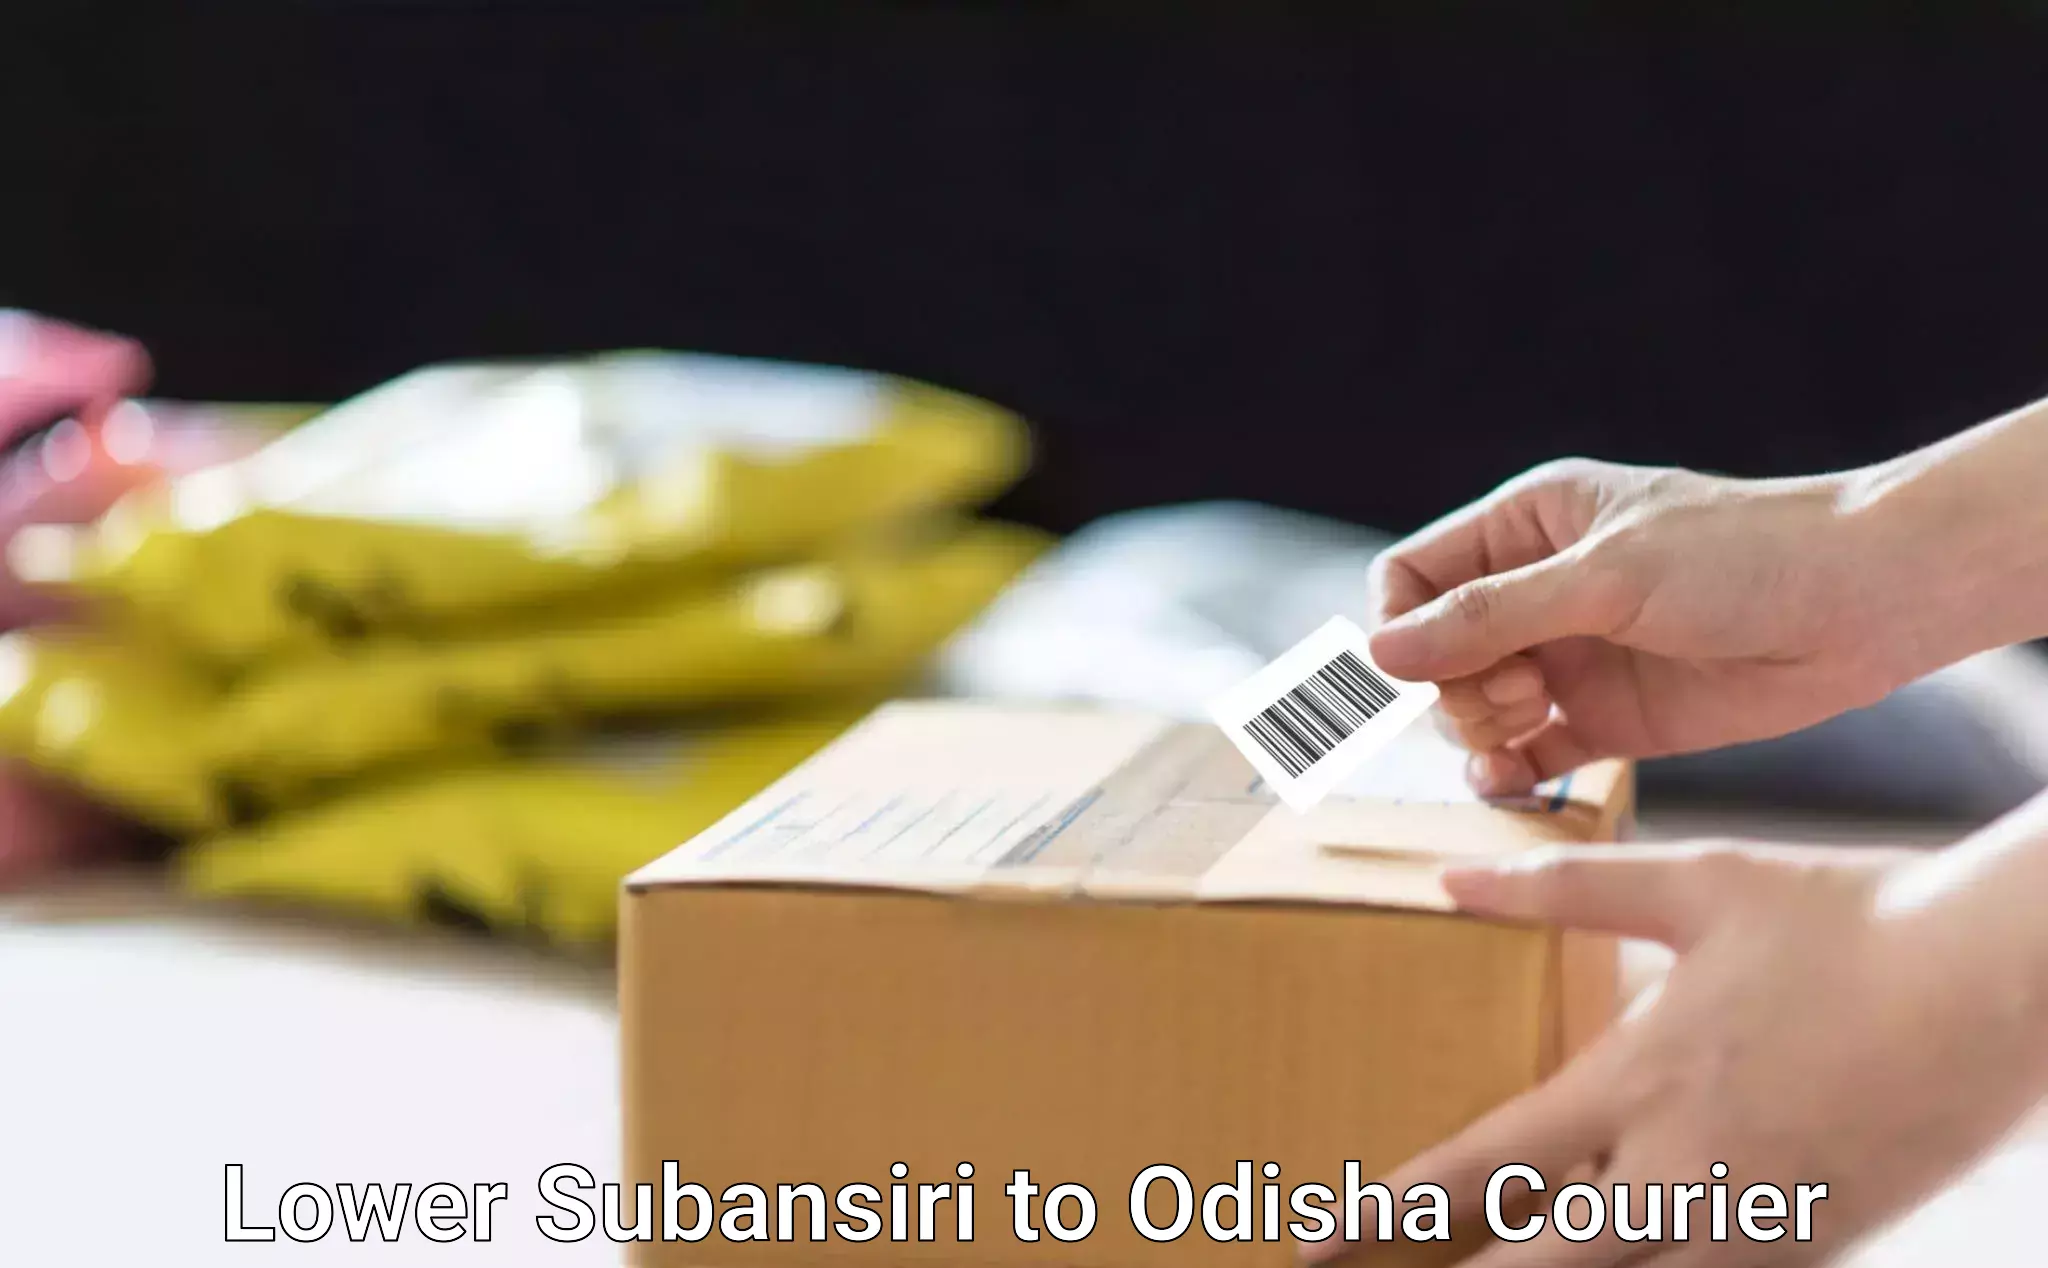 Global logistics network Lower Subansiri to Odisha